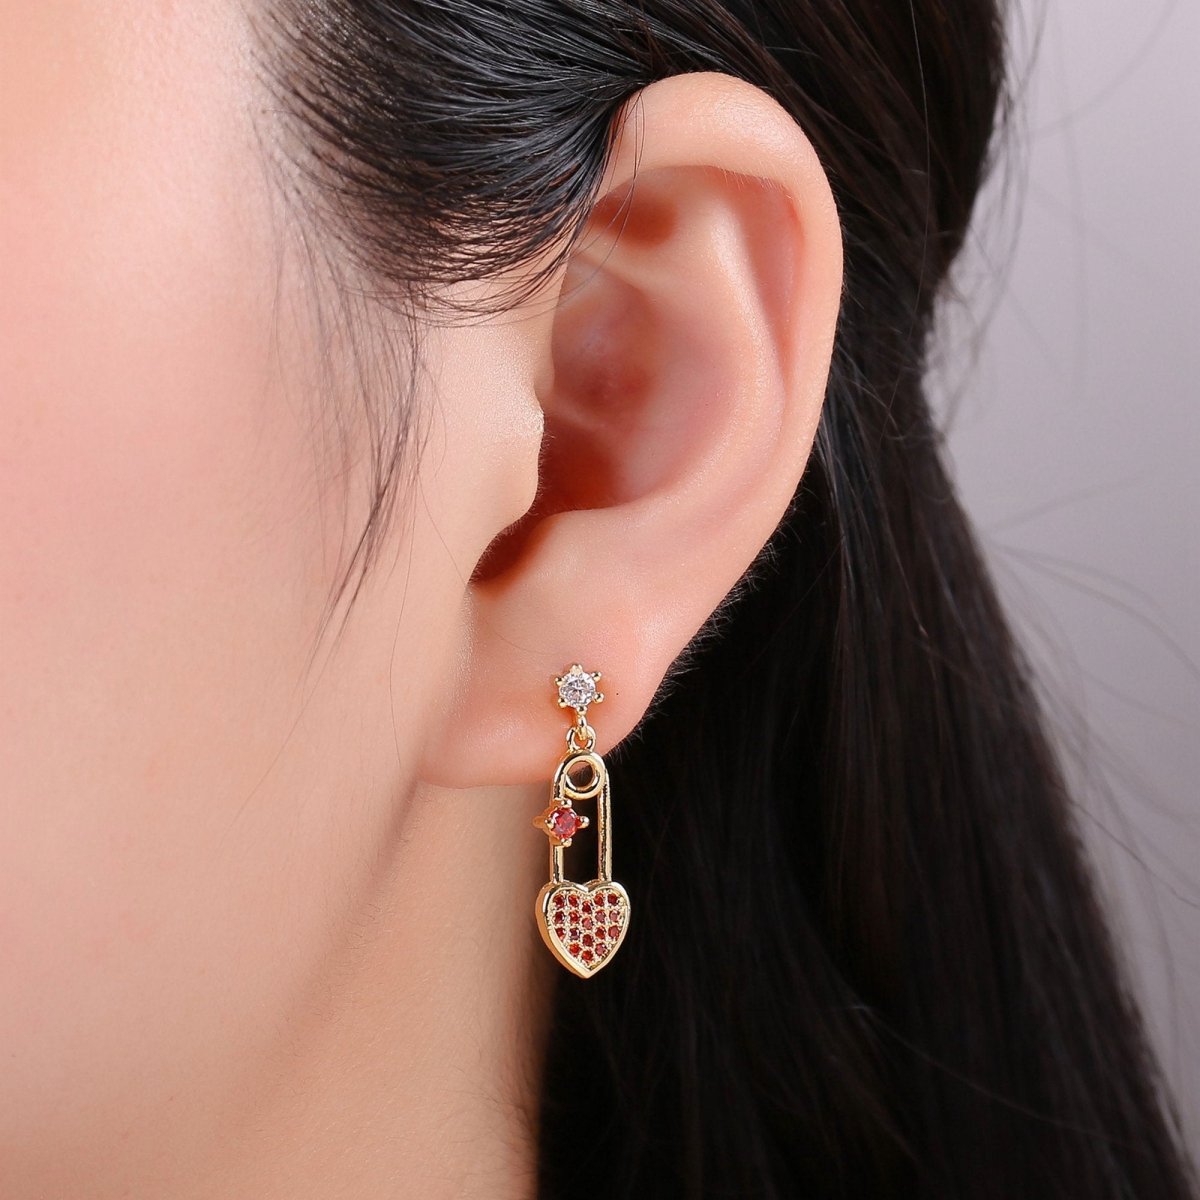 14k Gold Filled Heart Stud Earring, Earring Supplies for DIY Earring Jewelry, Earring Supply DIY Findings, Perfect for DIY Earrings K-472 - DLUXCA